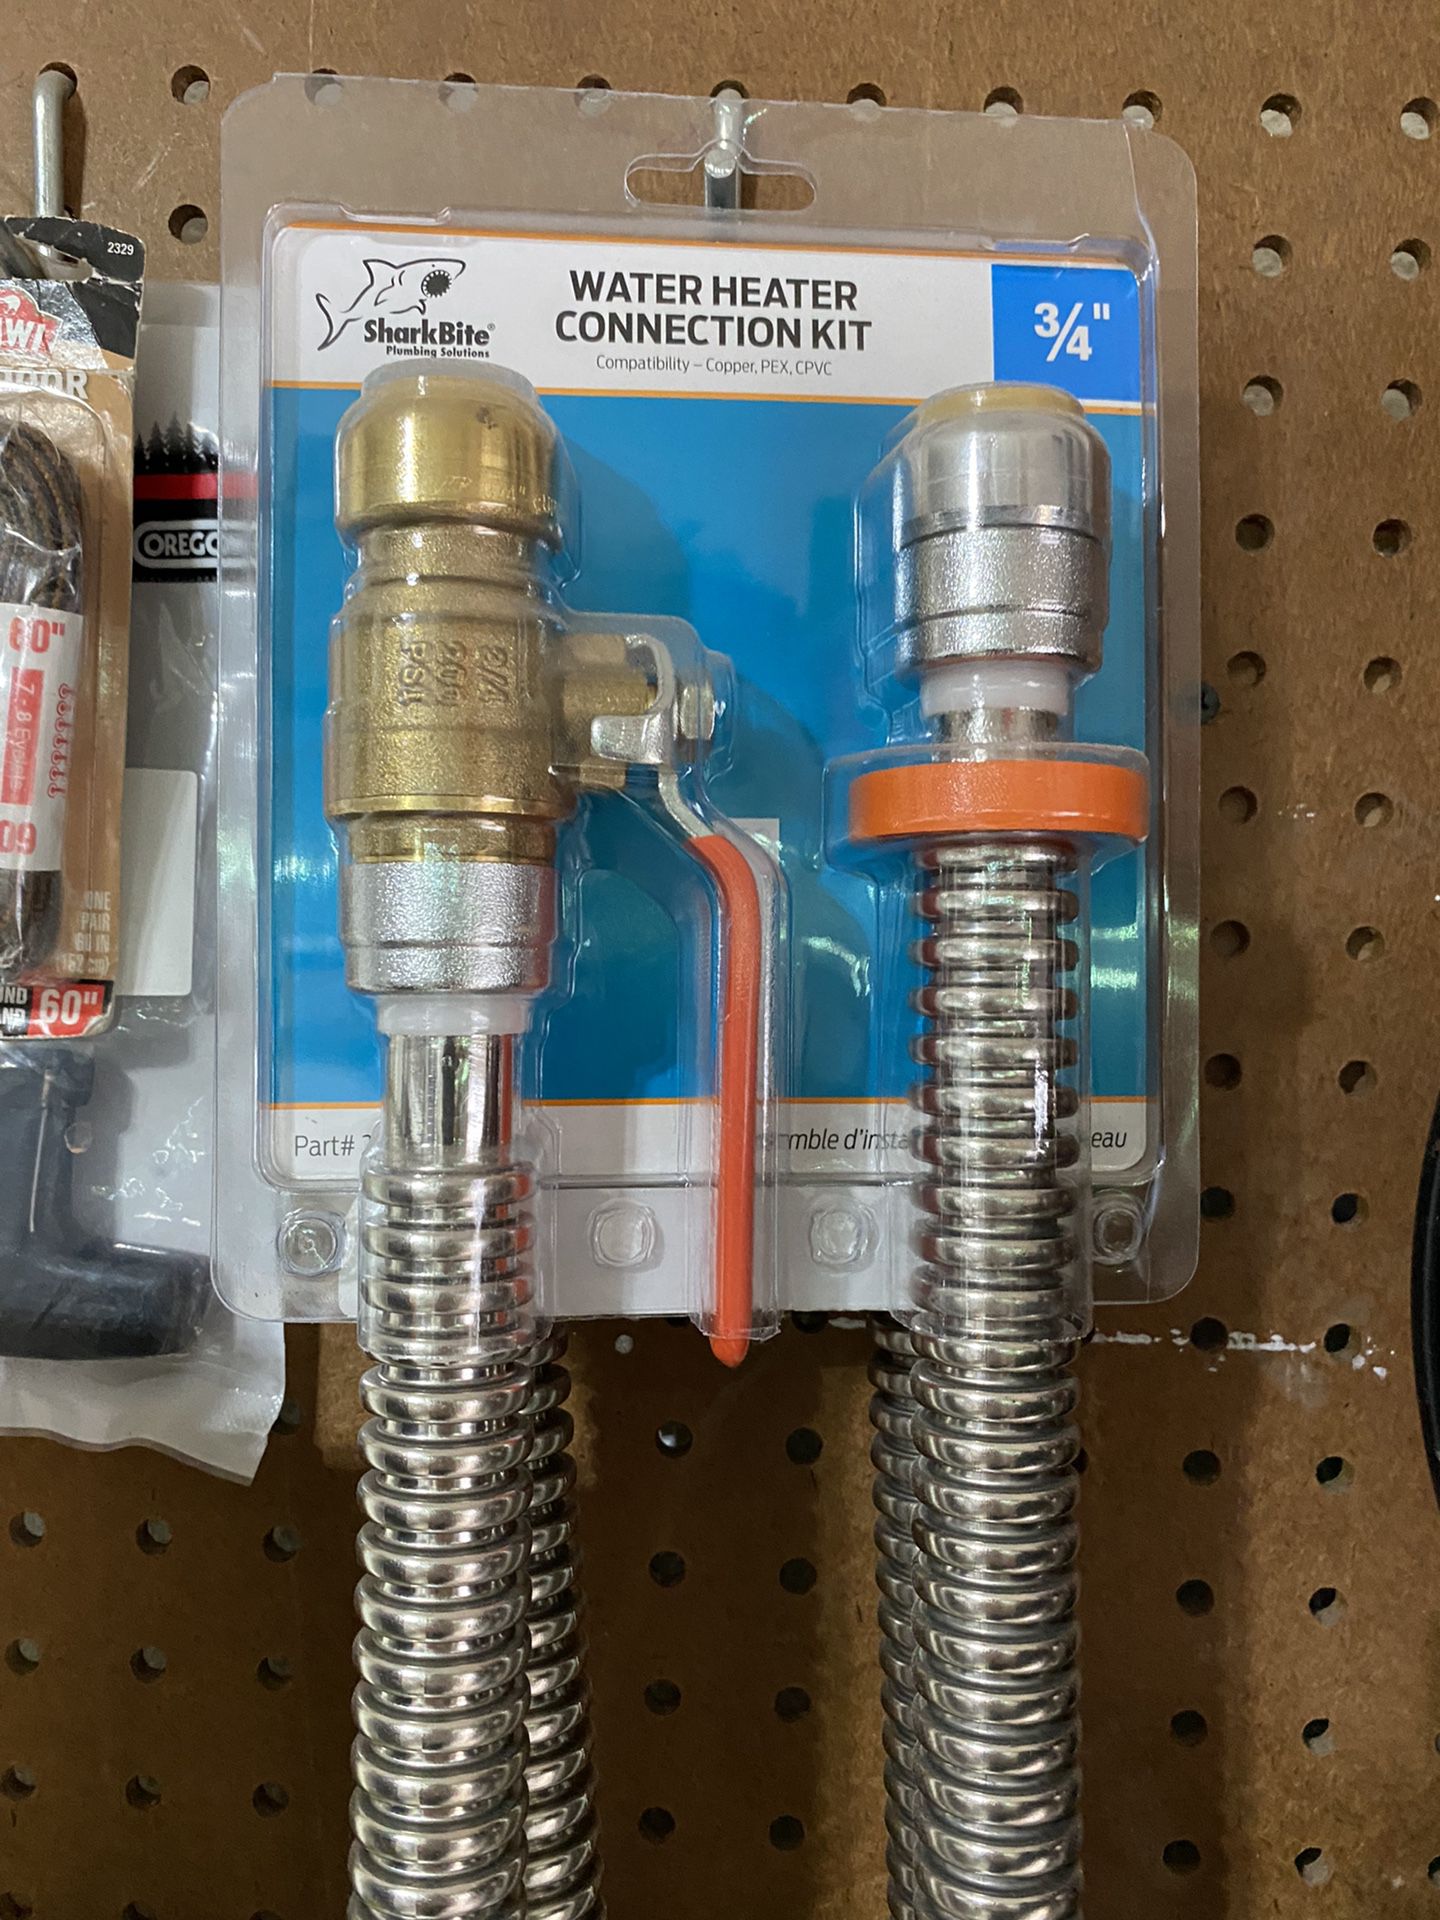 Shark Bite Water Heater InStall Kit